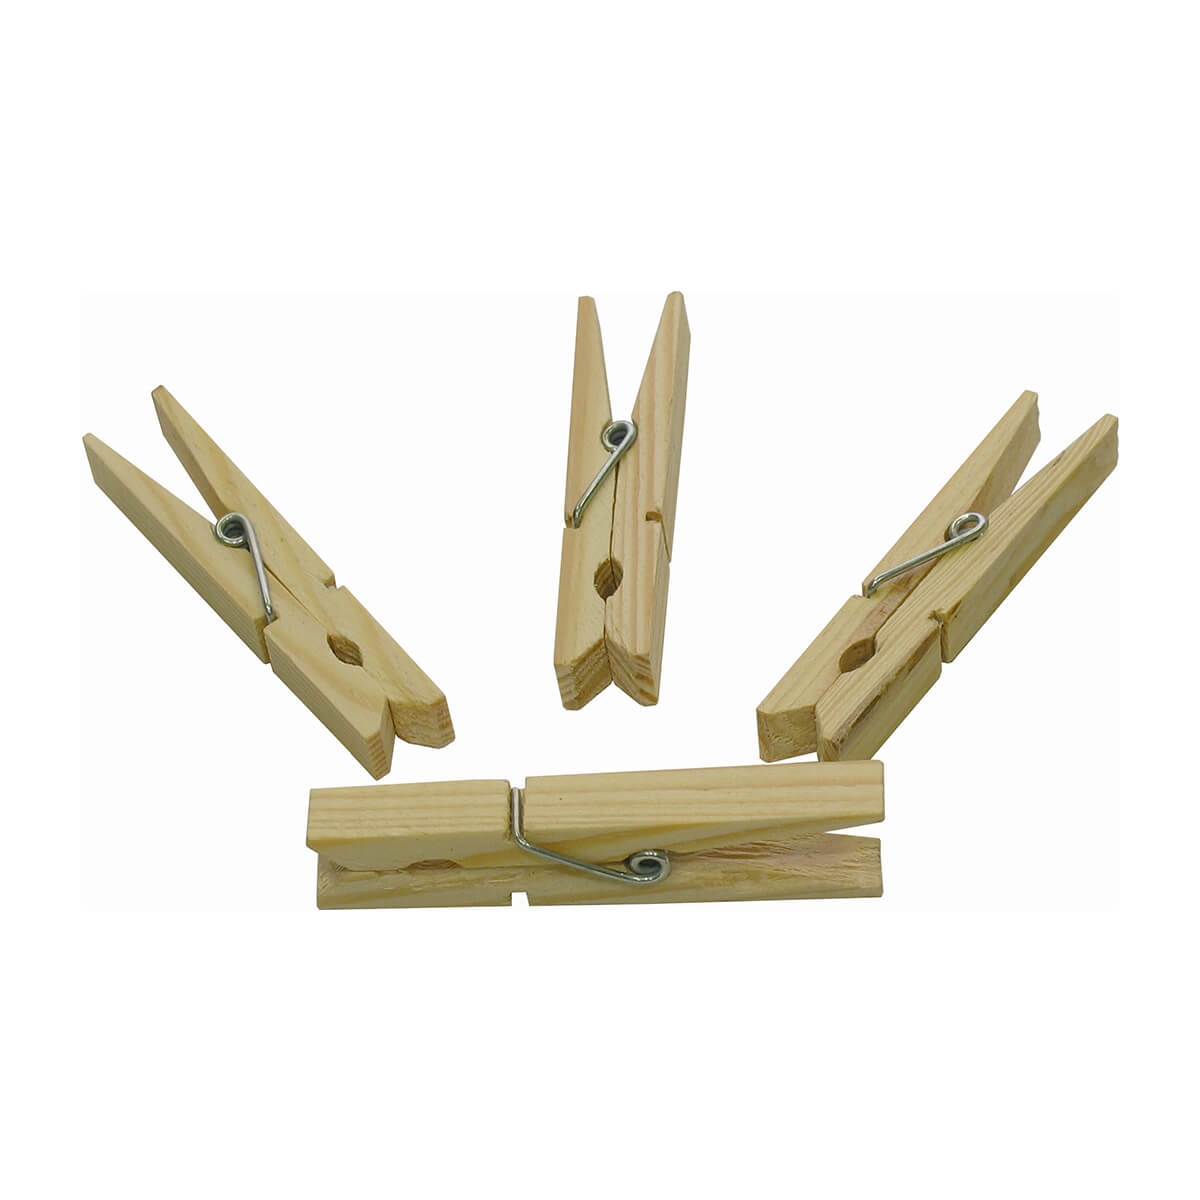 Wooden Clothespins - 100 / Bag